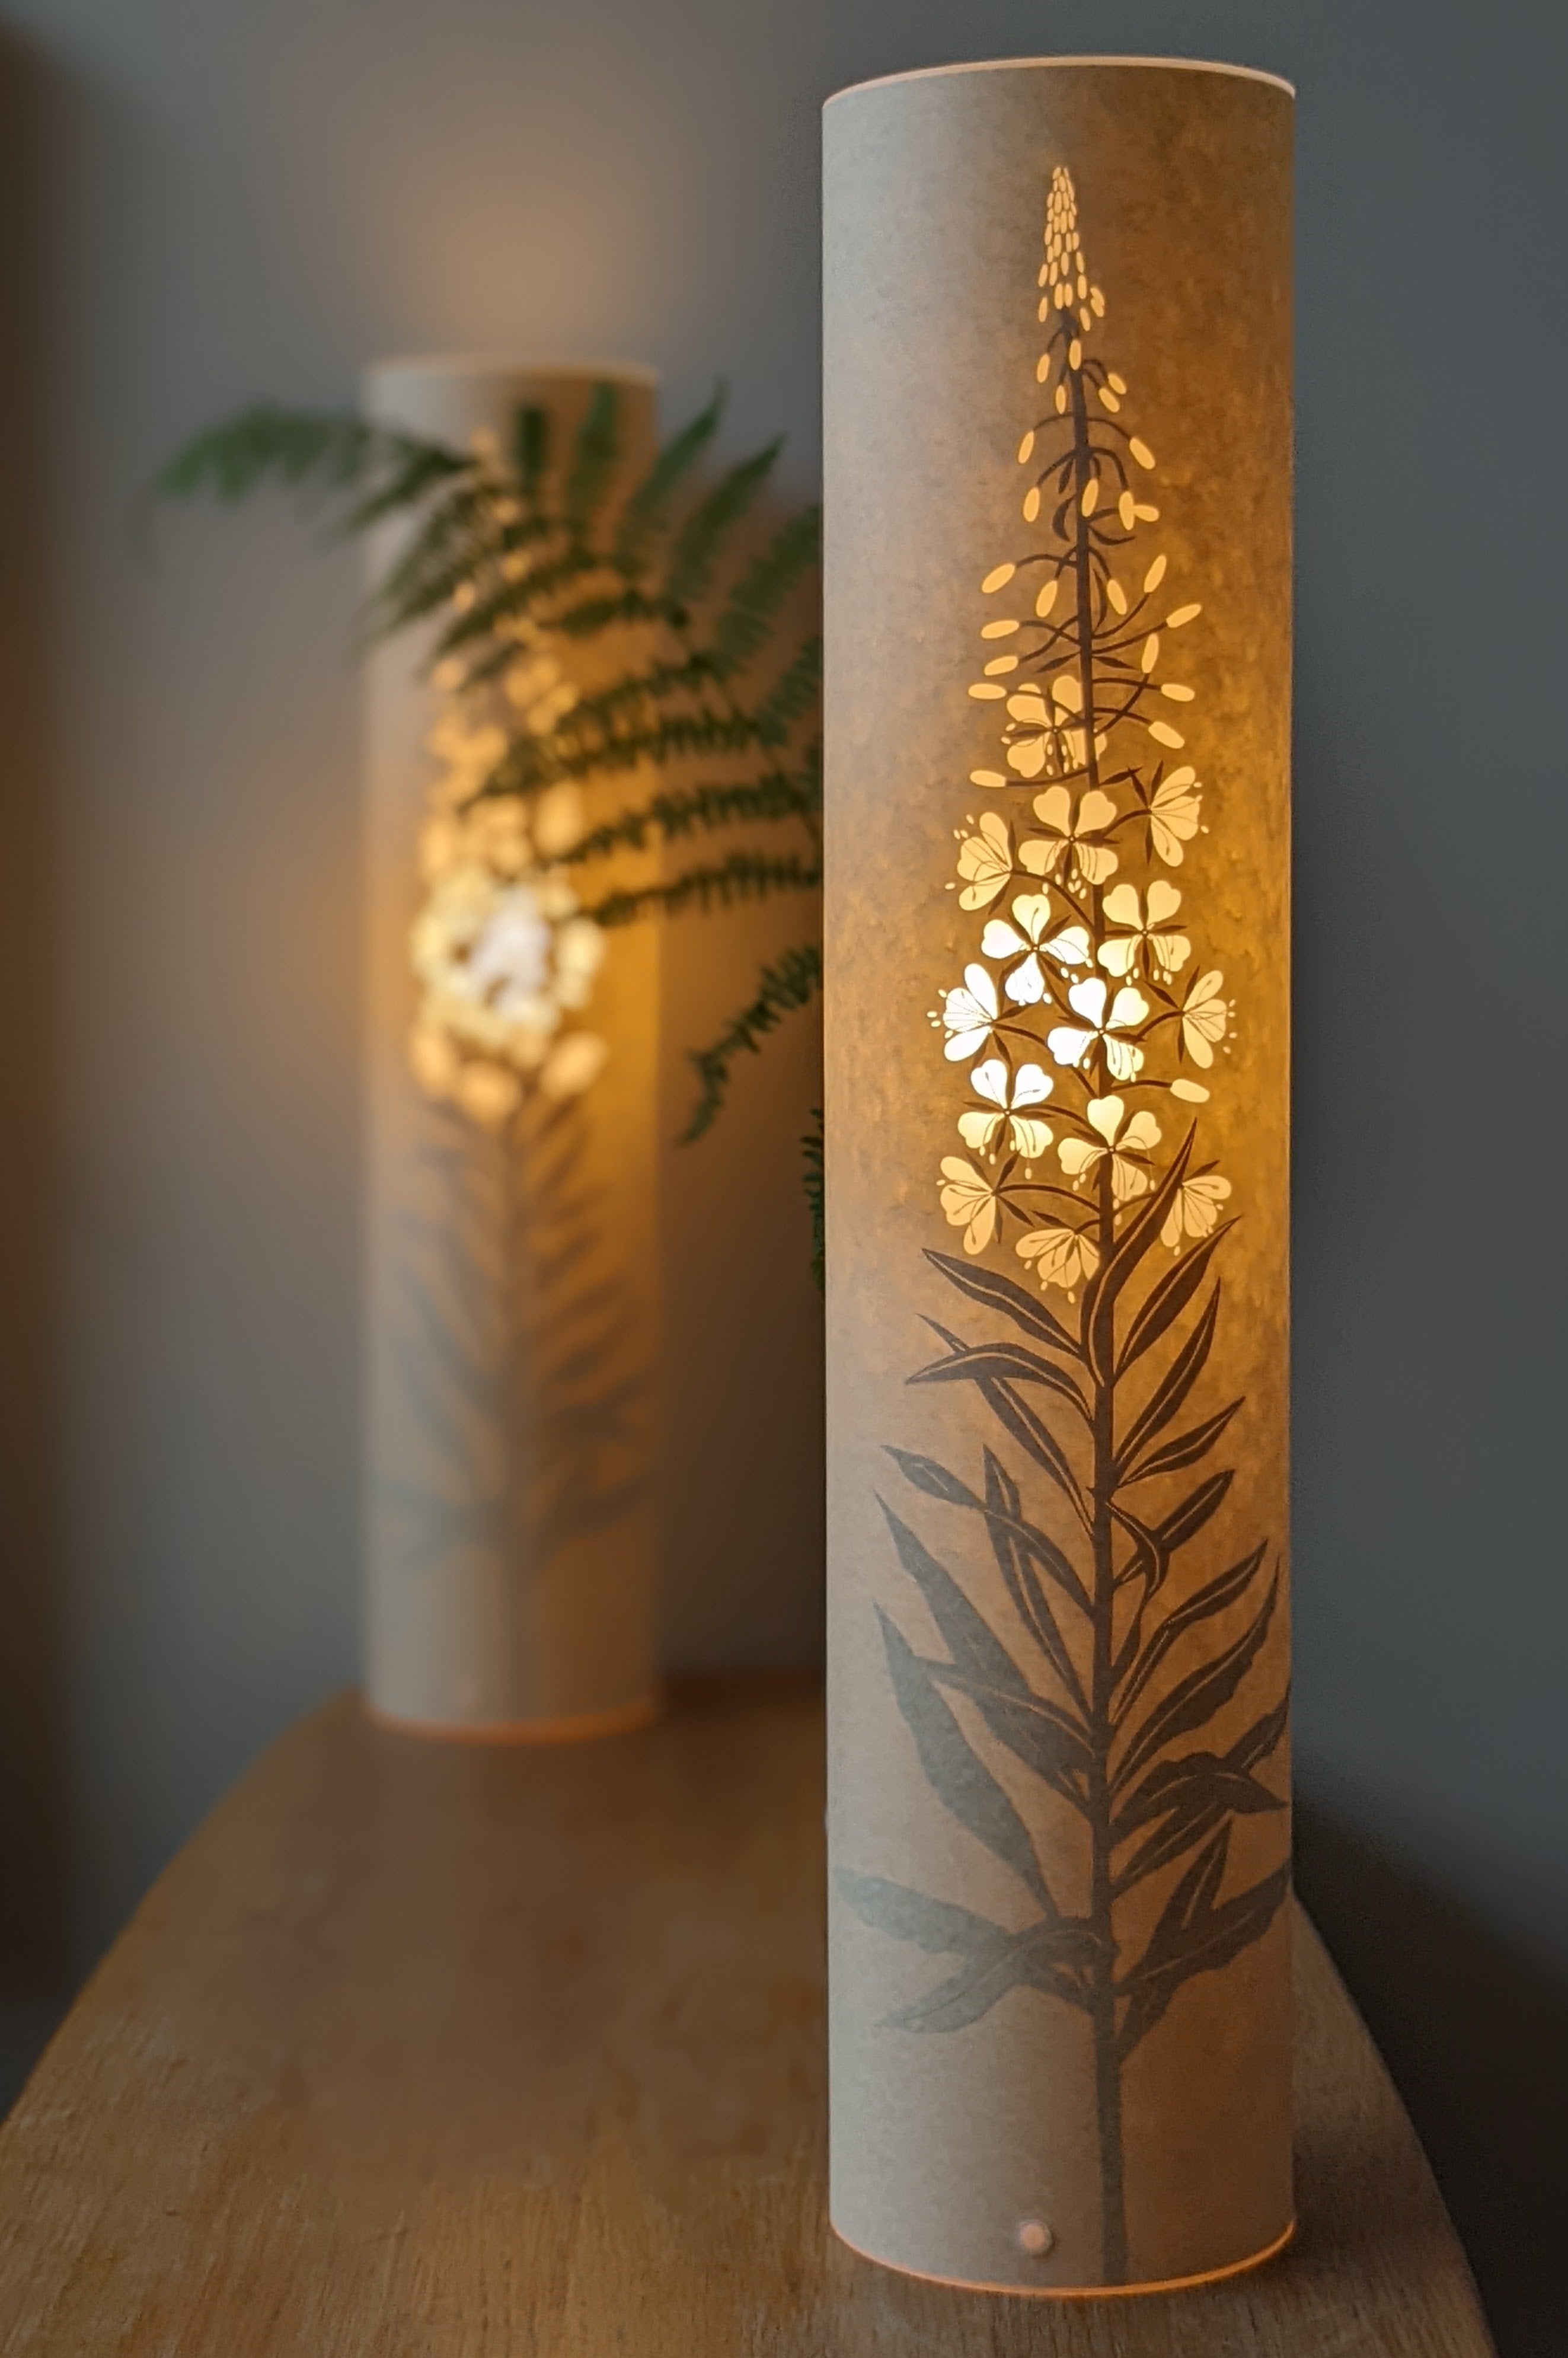 Rosebay Willowherb lamp by Hannah Nunn